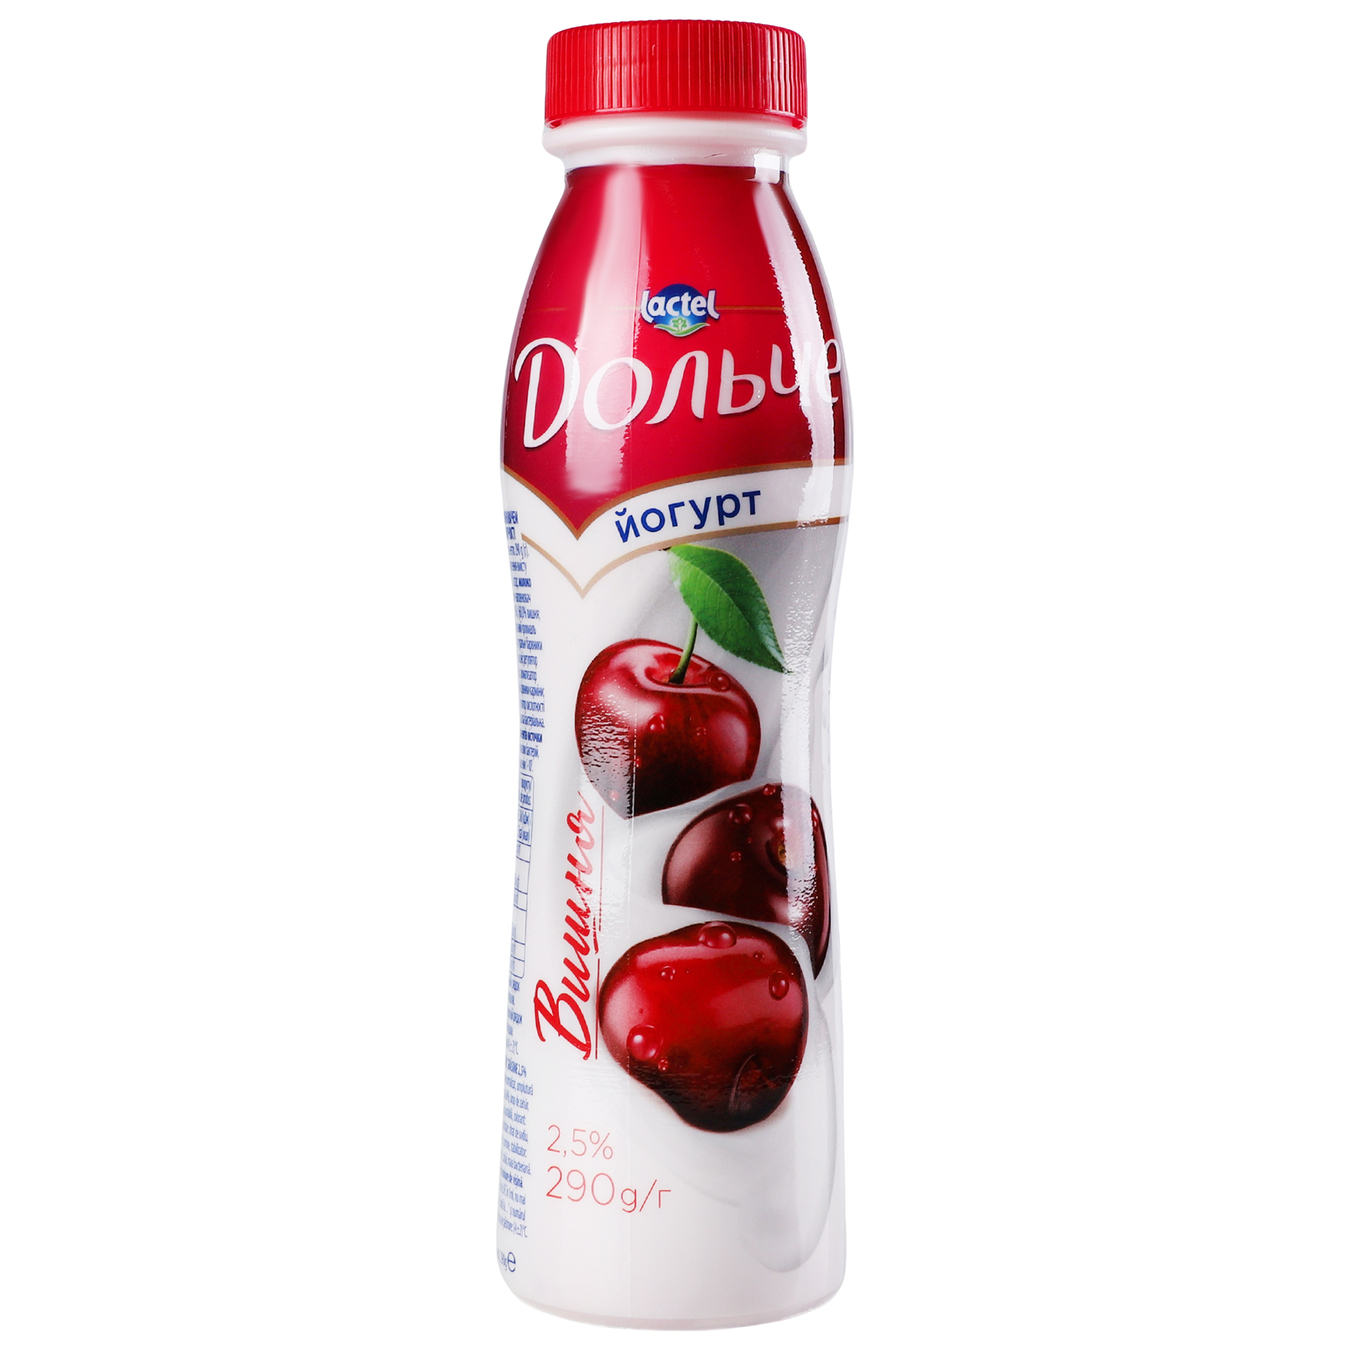 Lactel Dolce Cherry Flavored Yogurt 2,5% 290g